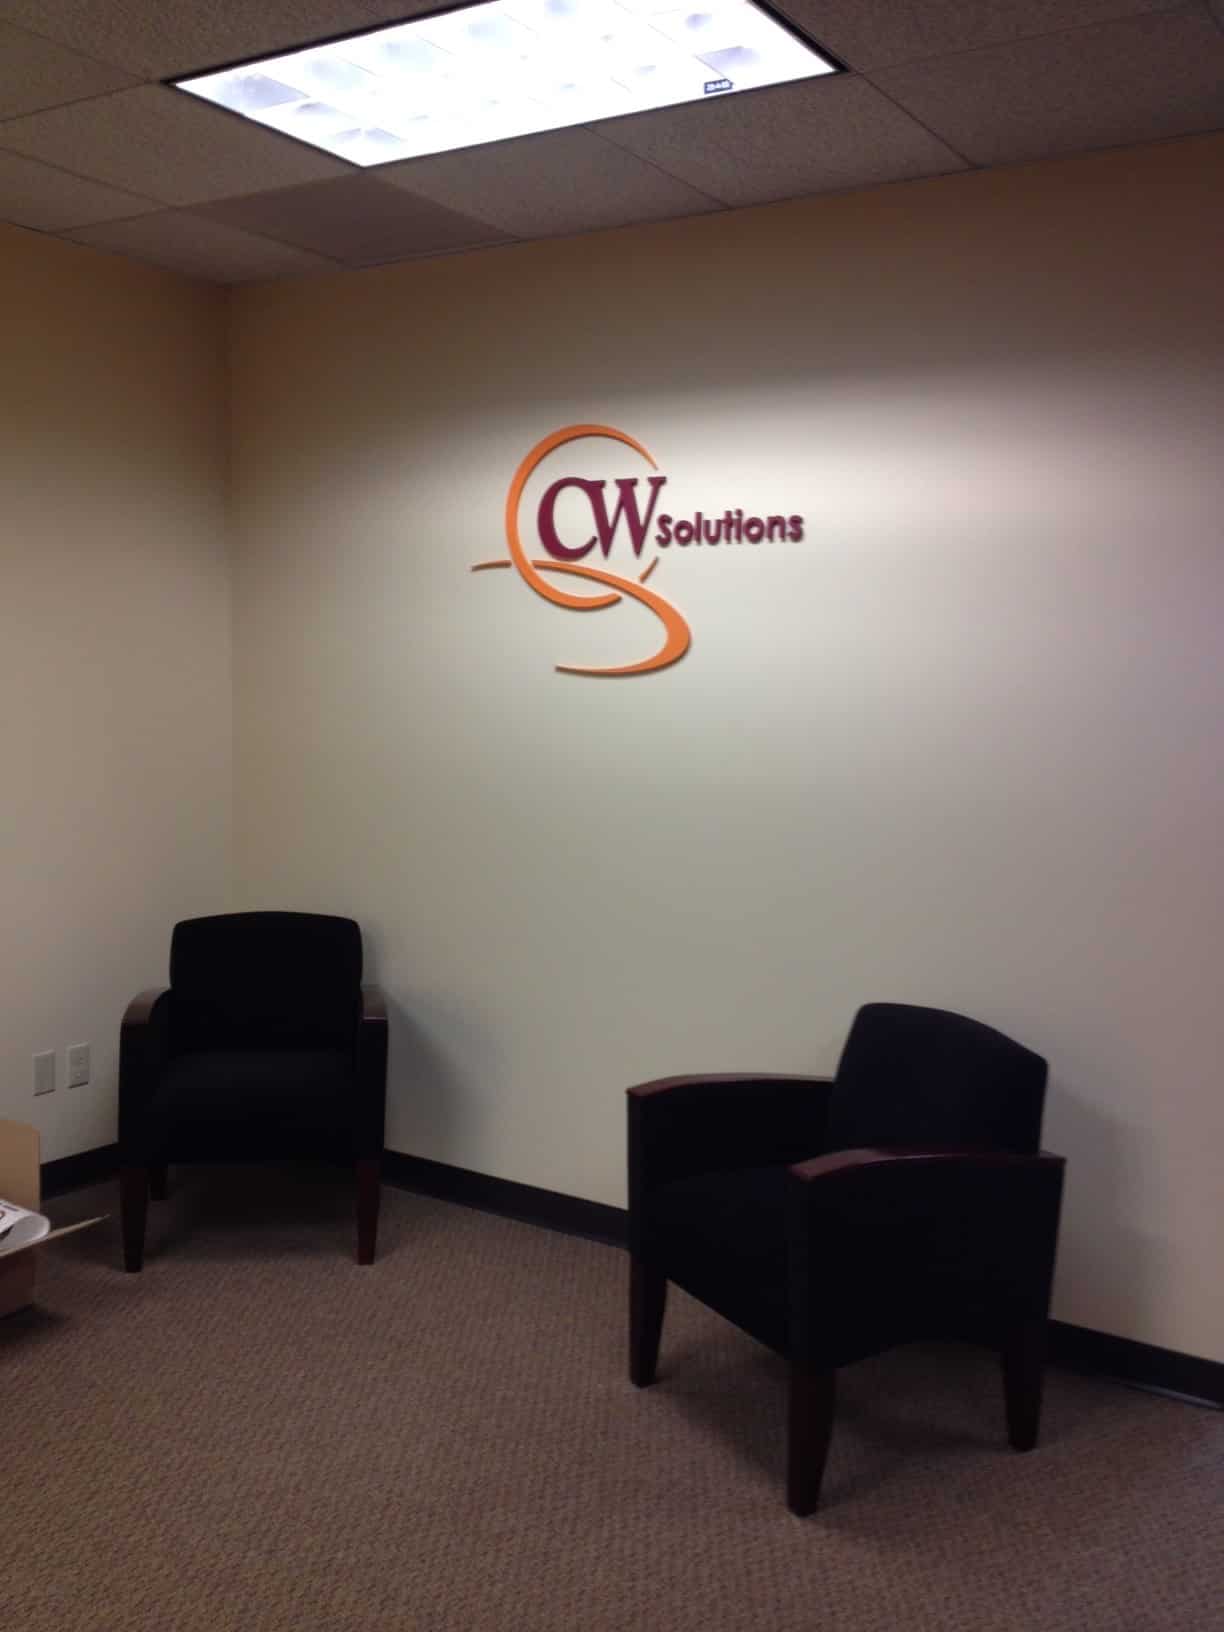 CW solutions logo install 4